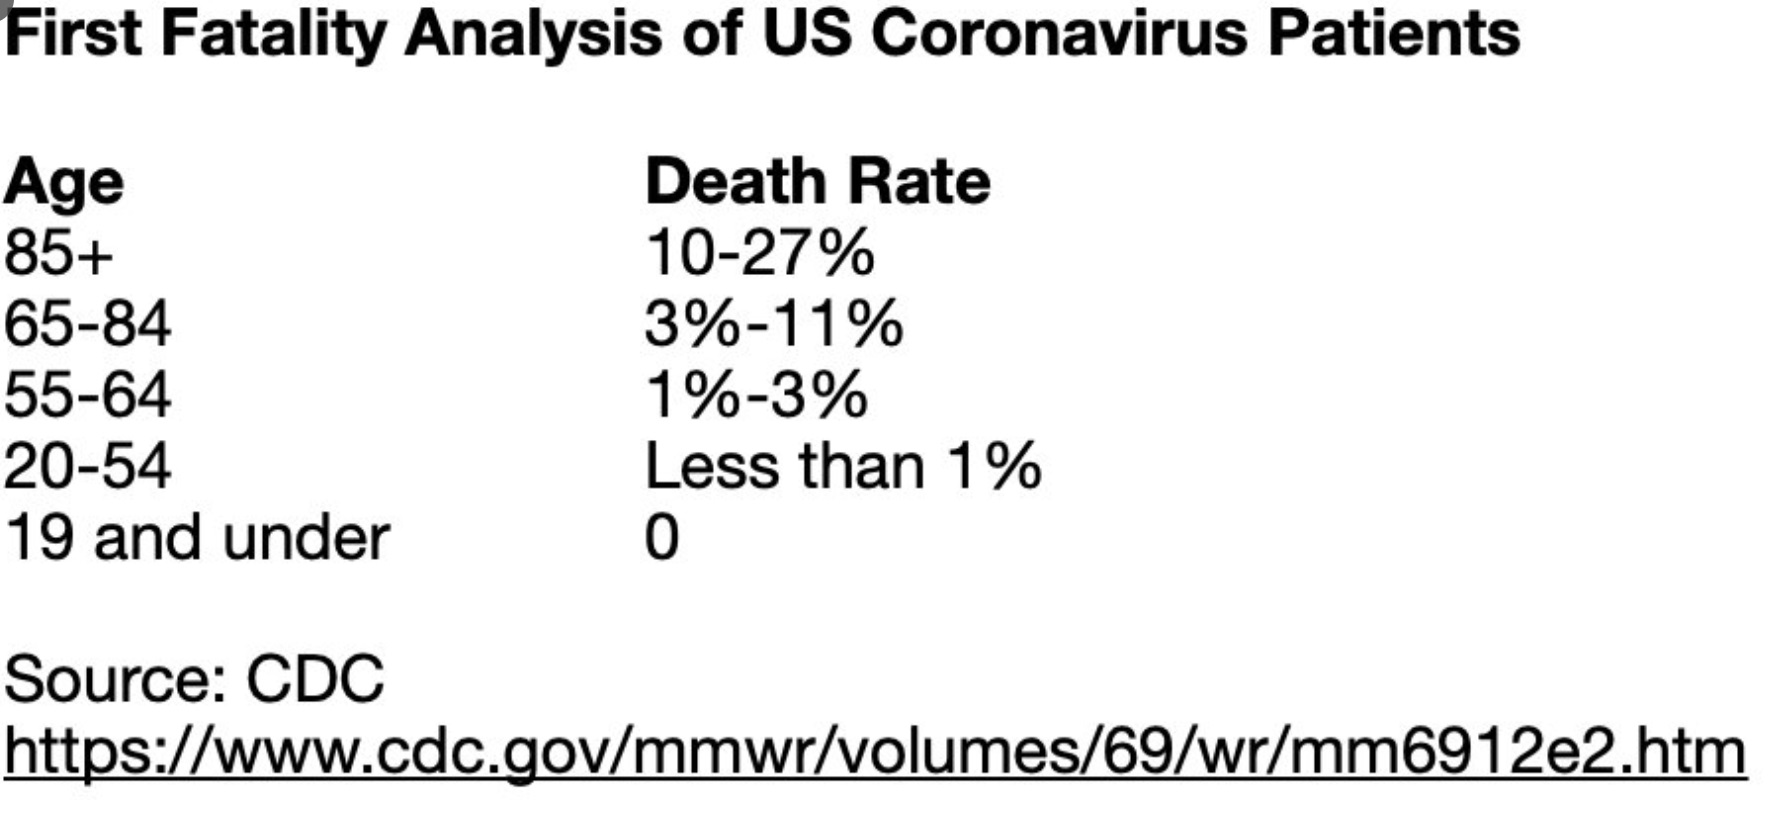 PHOTO 10-27% Of 85+ Year Olds Die From Corona Virus